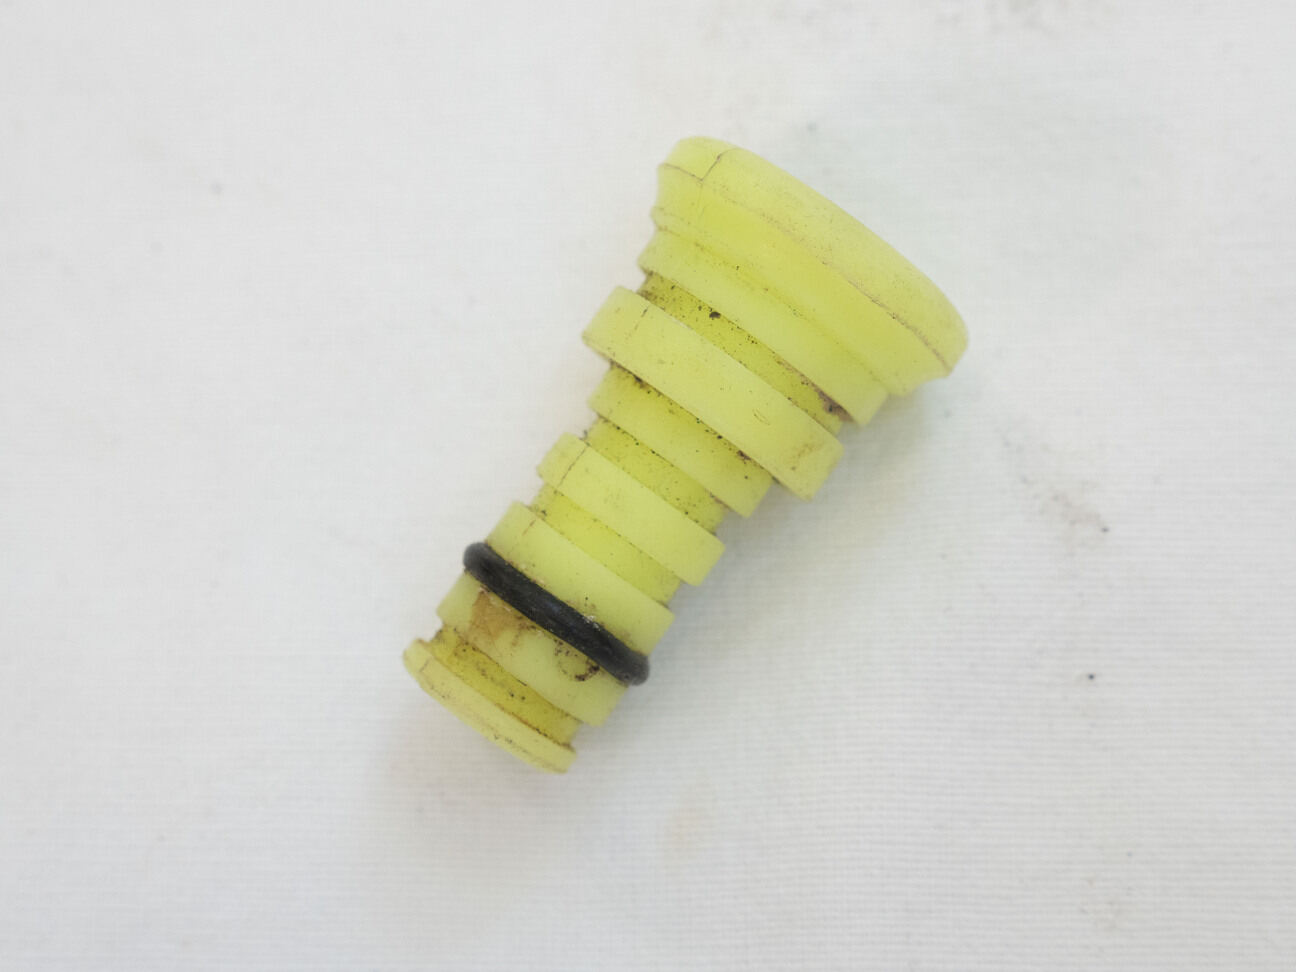 Yellow barrel plug with one oring